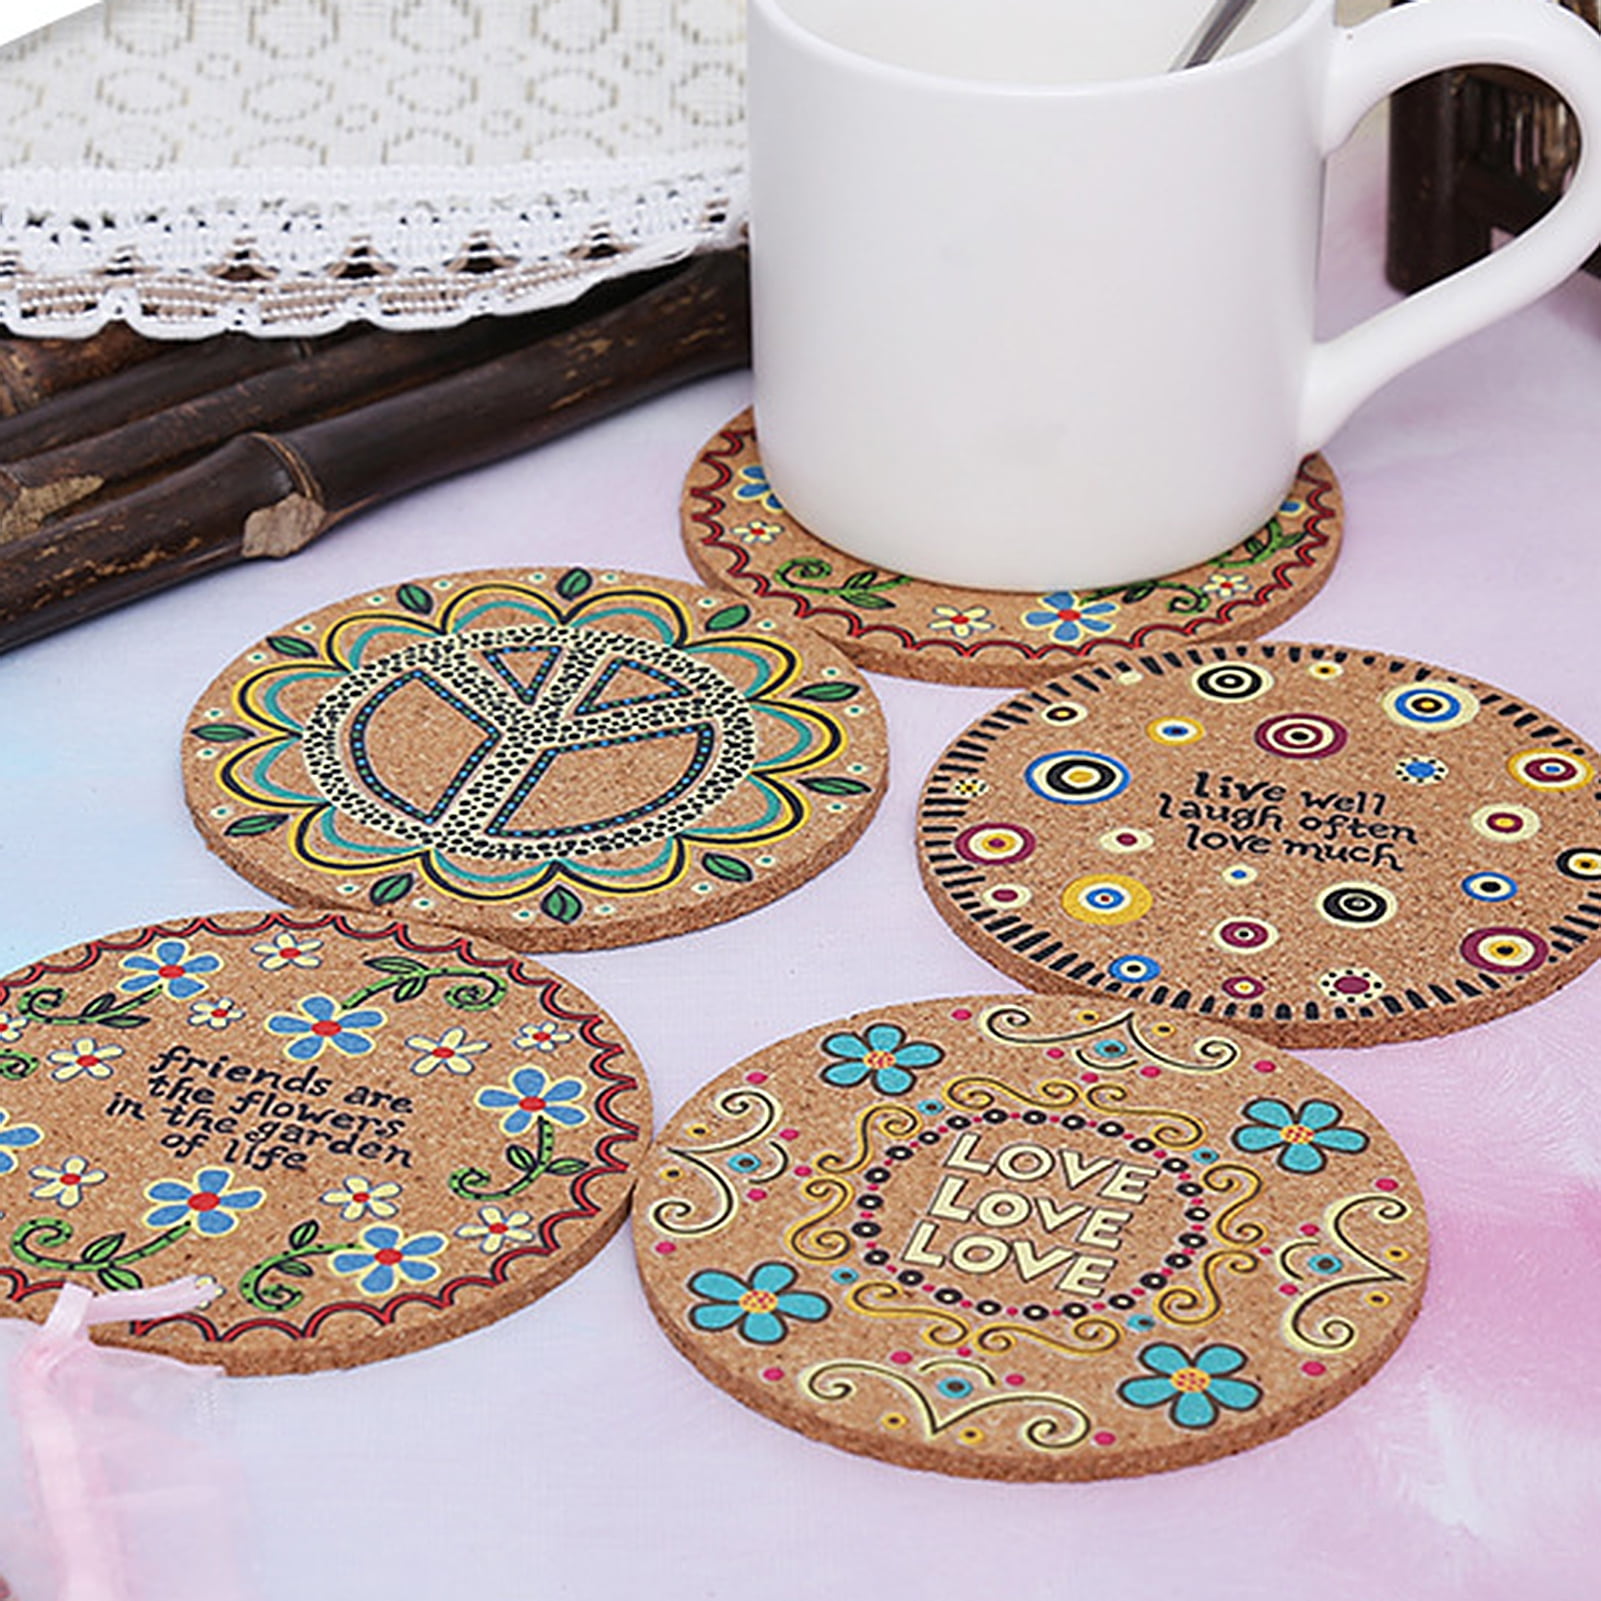 Details about   Bergsma Ceramic Trivet/Coaster With Cork Backing 